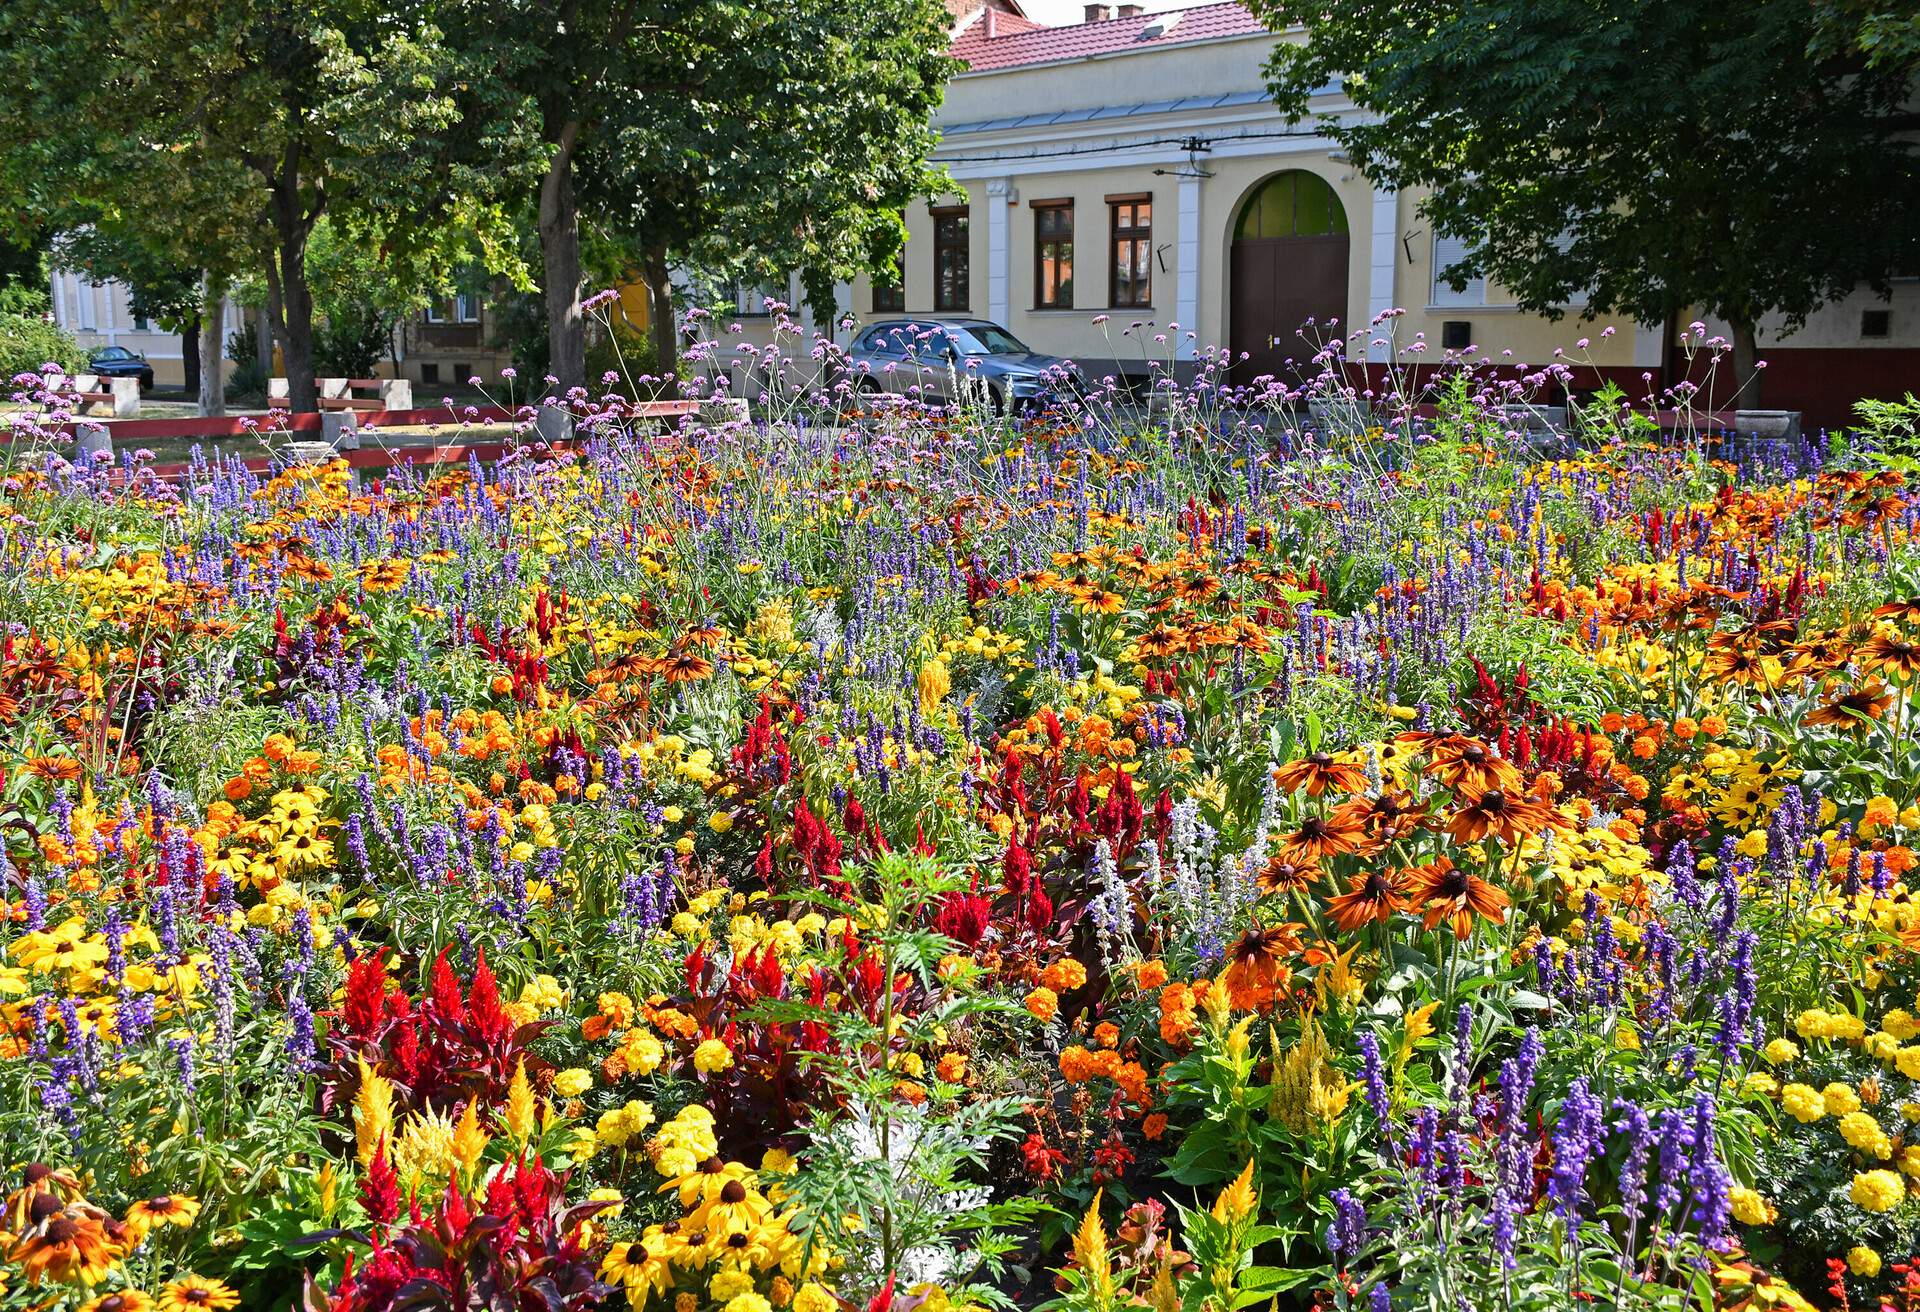 Flowers in the city park, Debrecen, Hungary; Shutterstock ID 1468961177